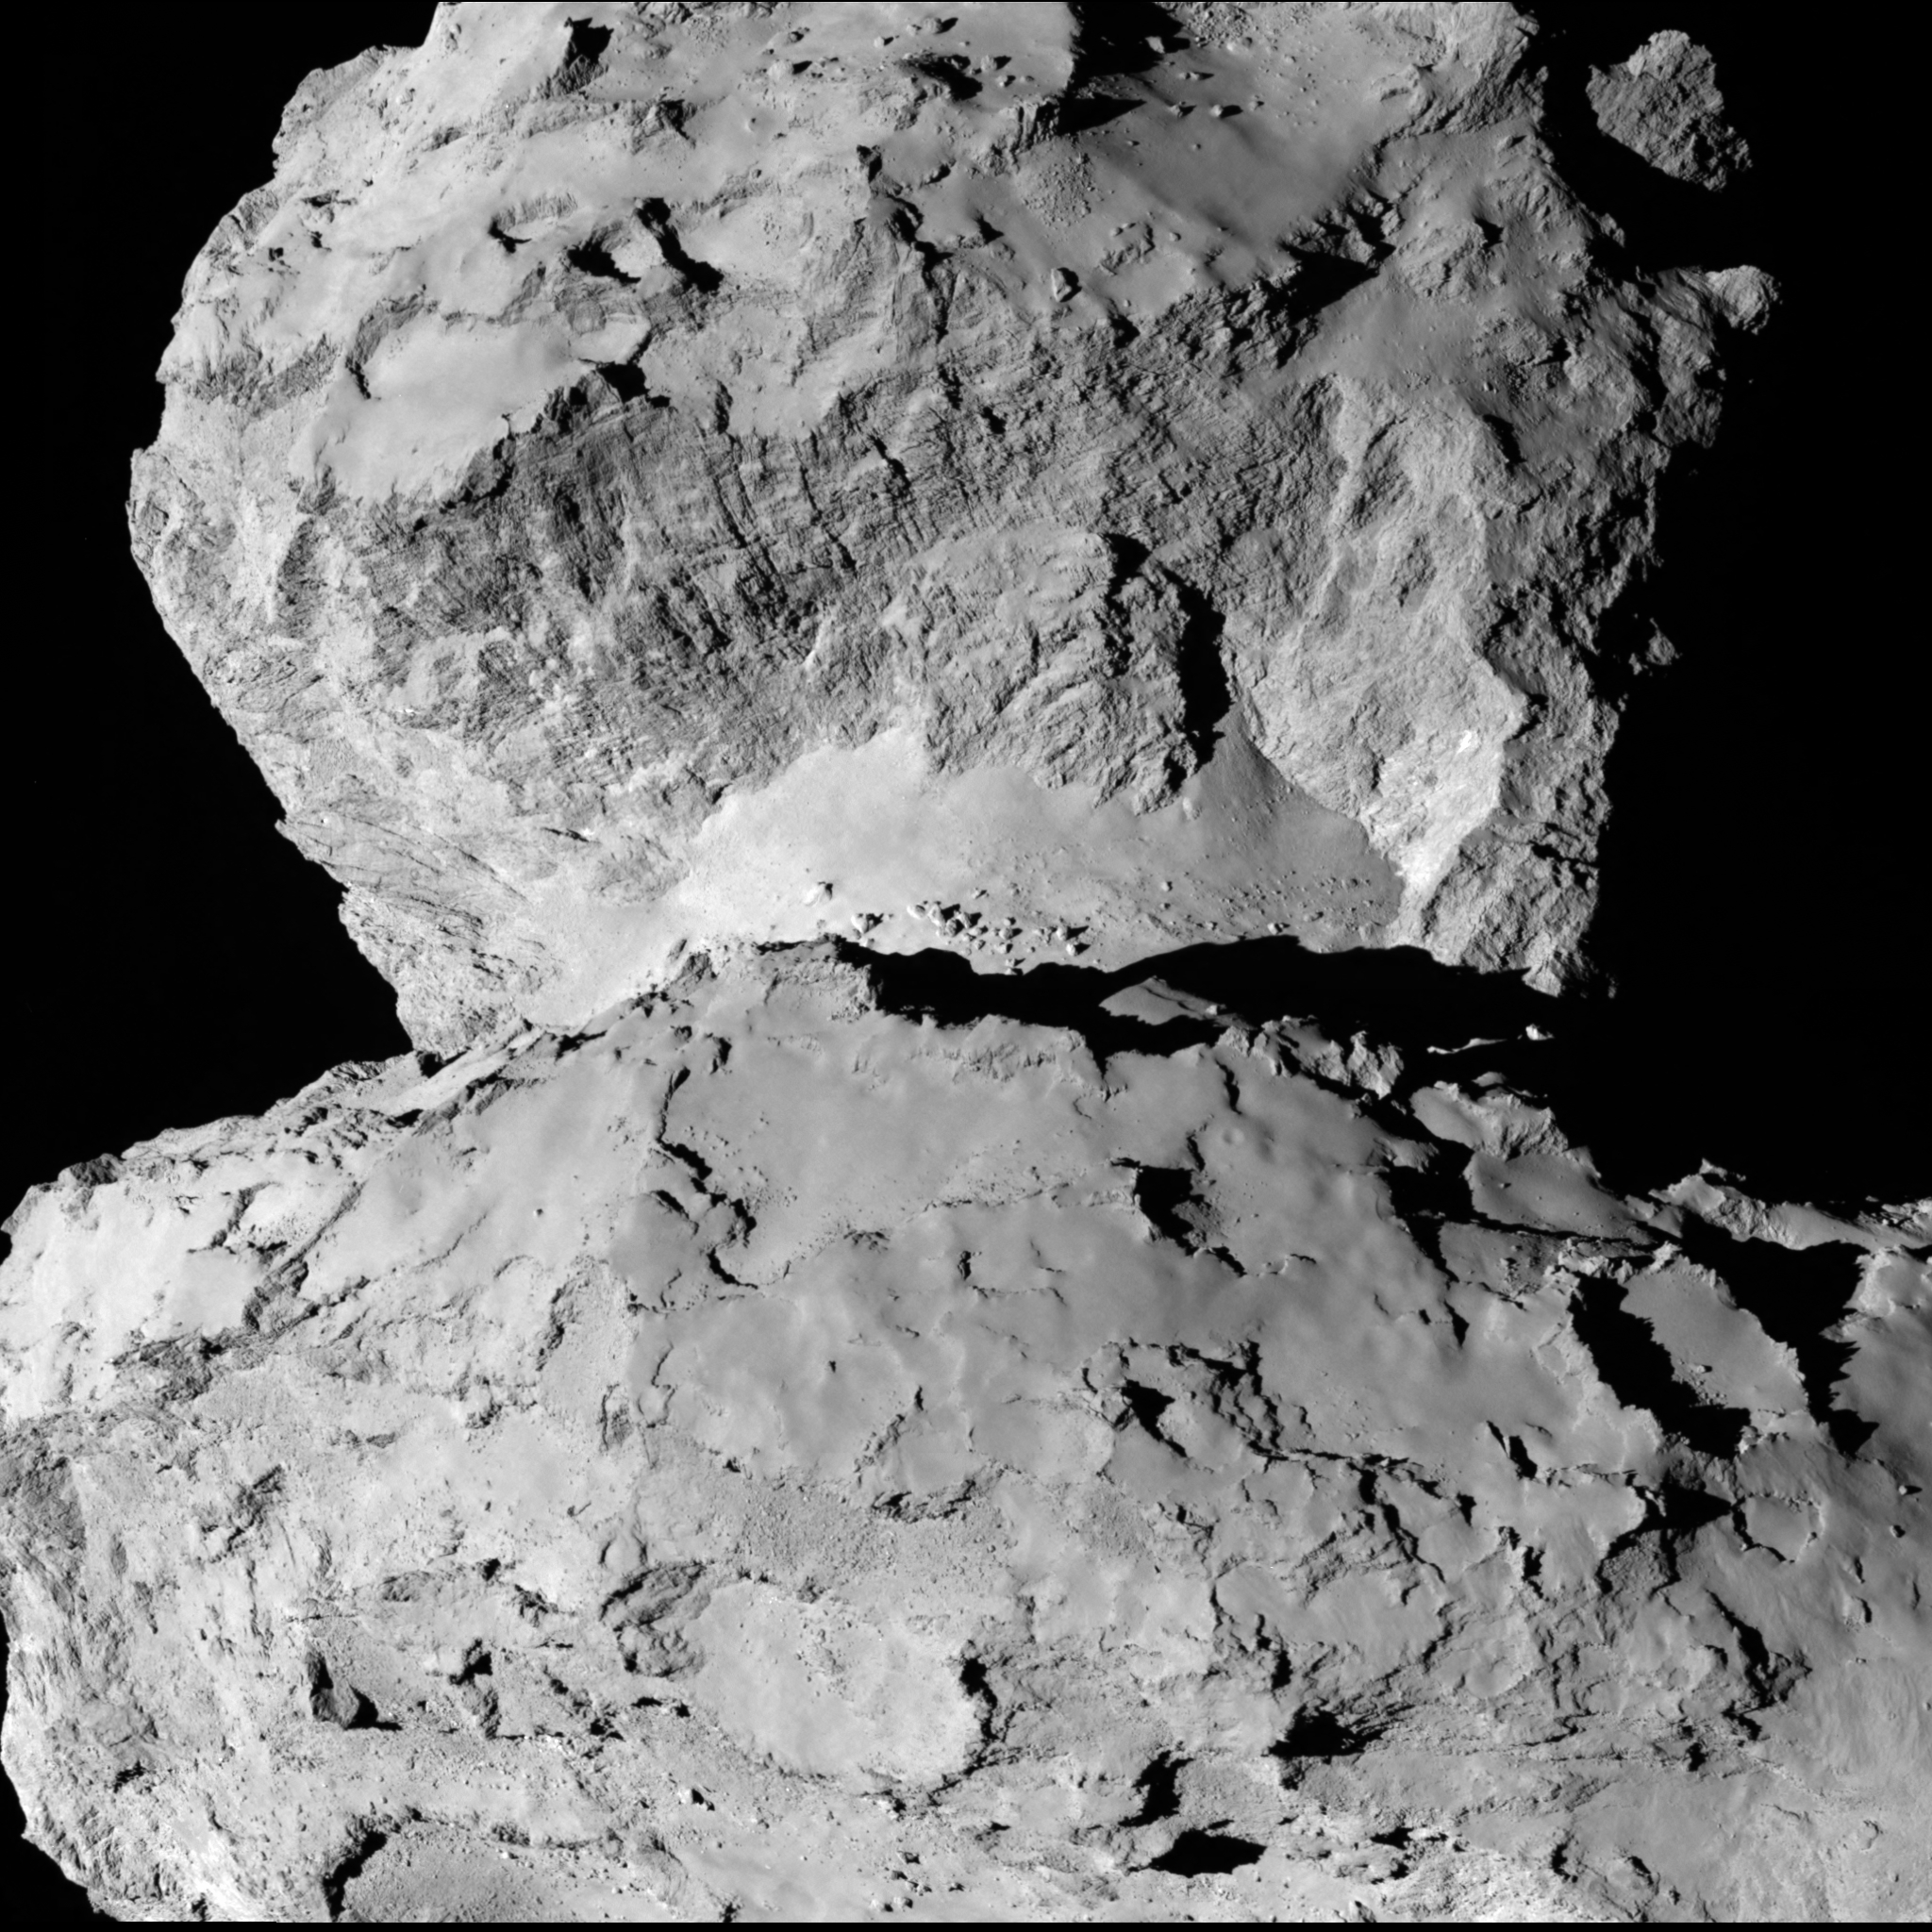 APOD: 2014 August 19 - Contrasting Terrains on Comet Churyumov